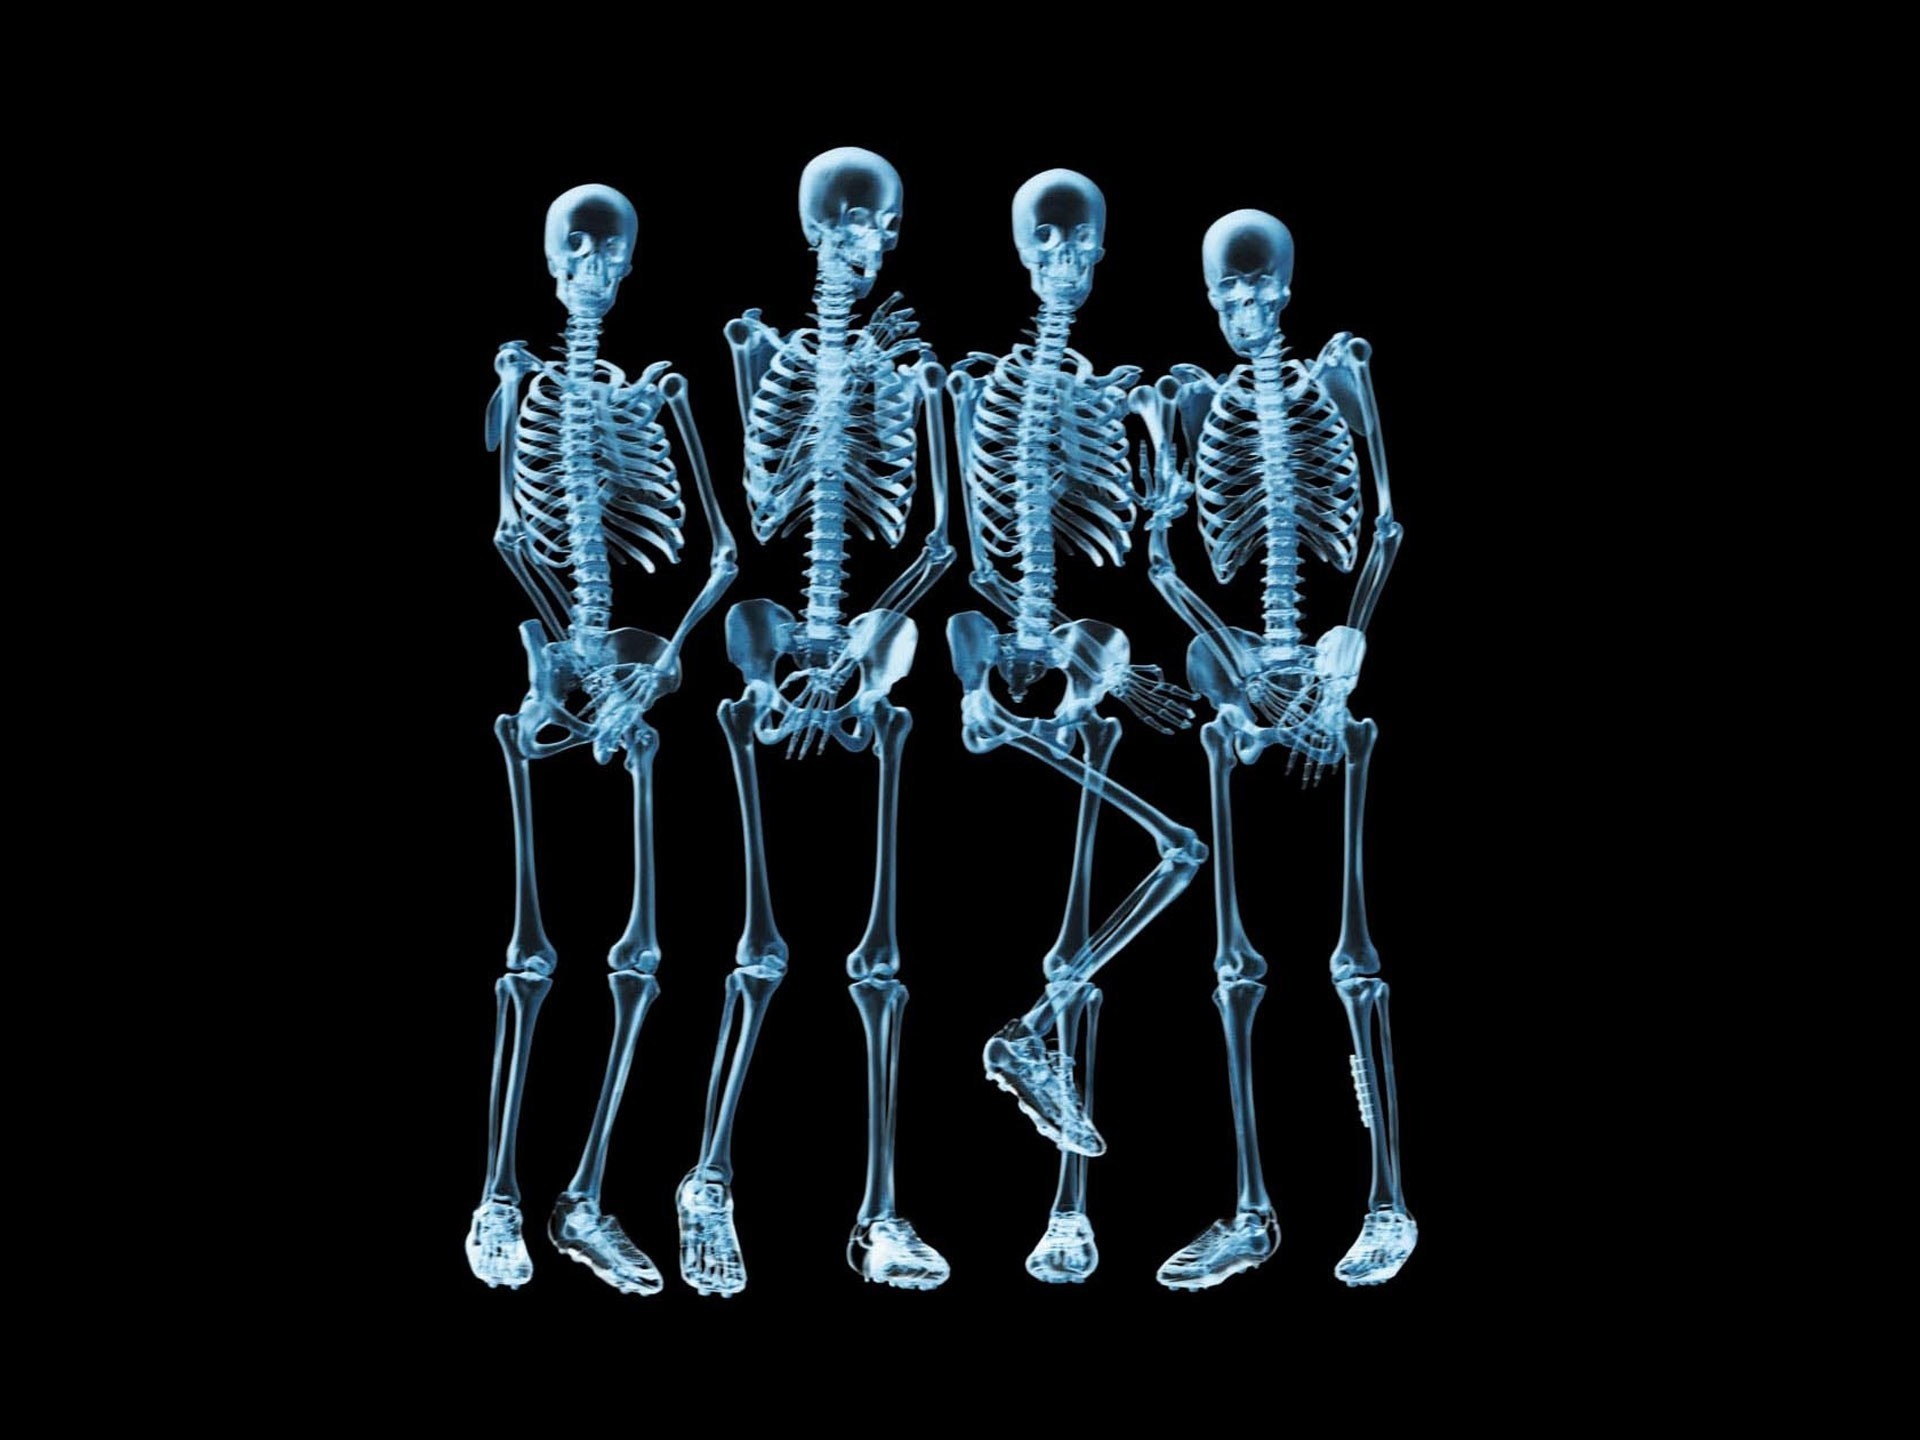 Xray funny skeletons wallpaper. PC